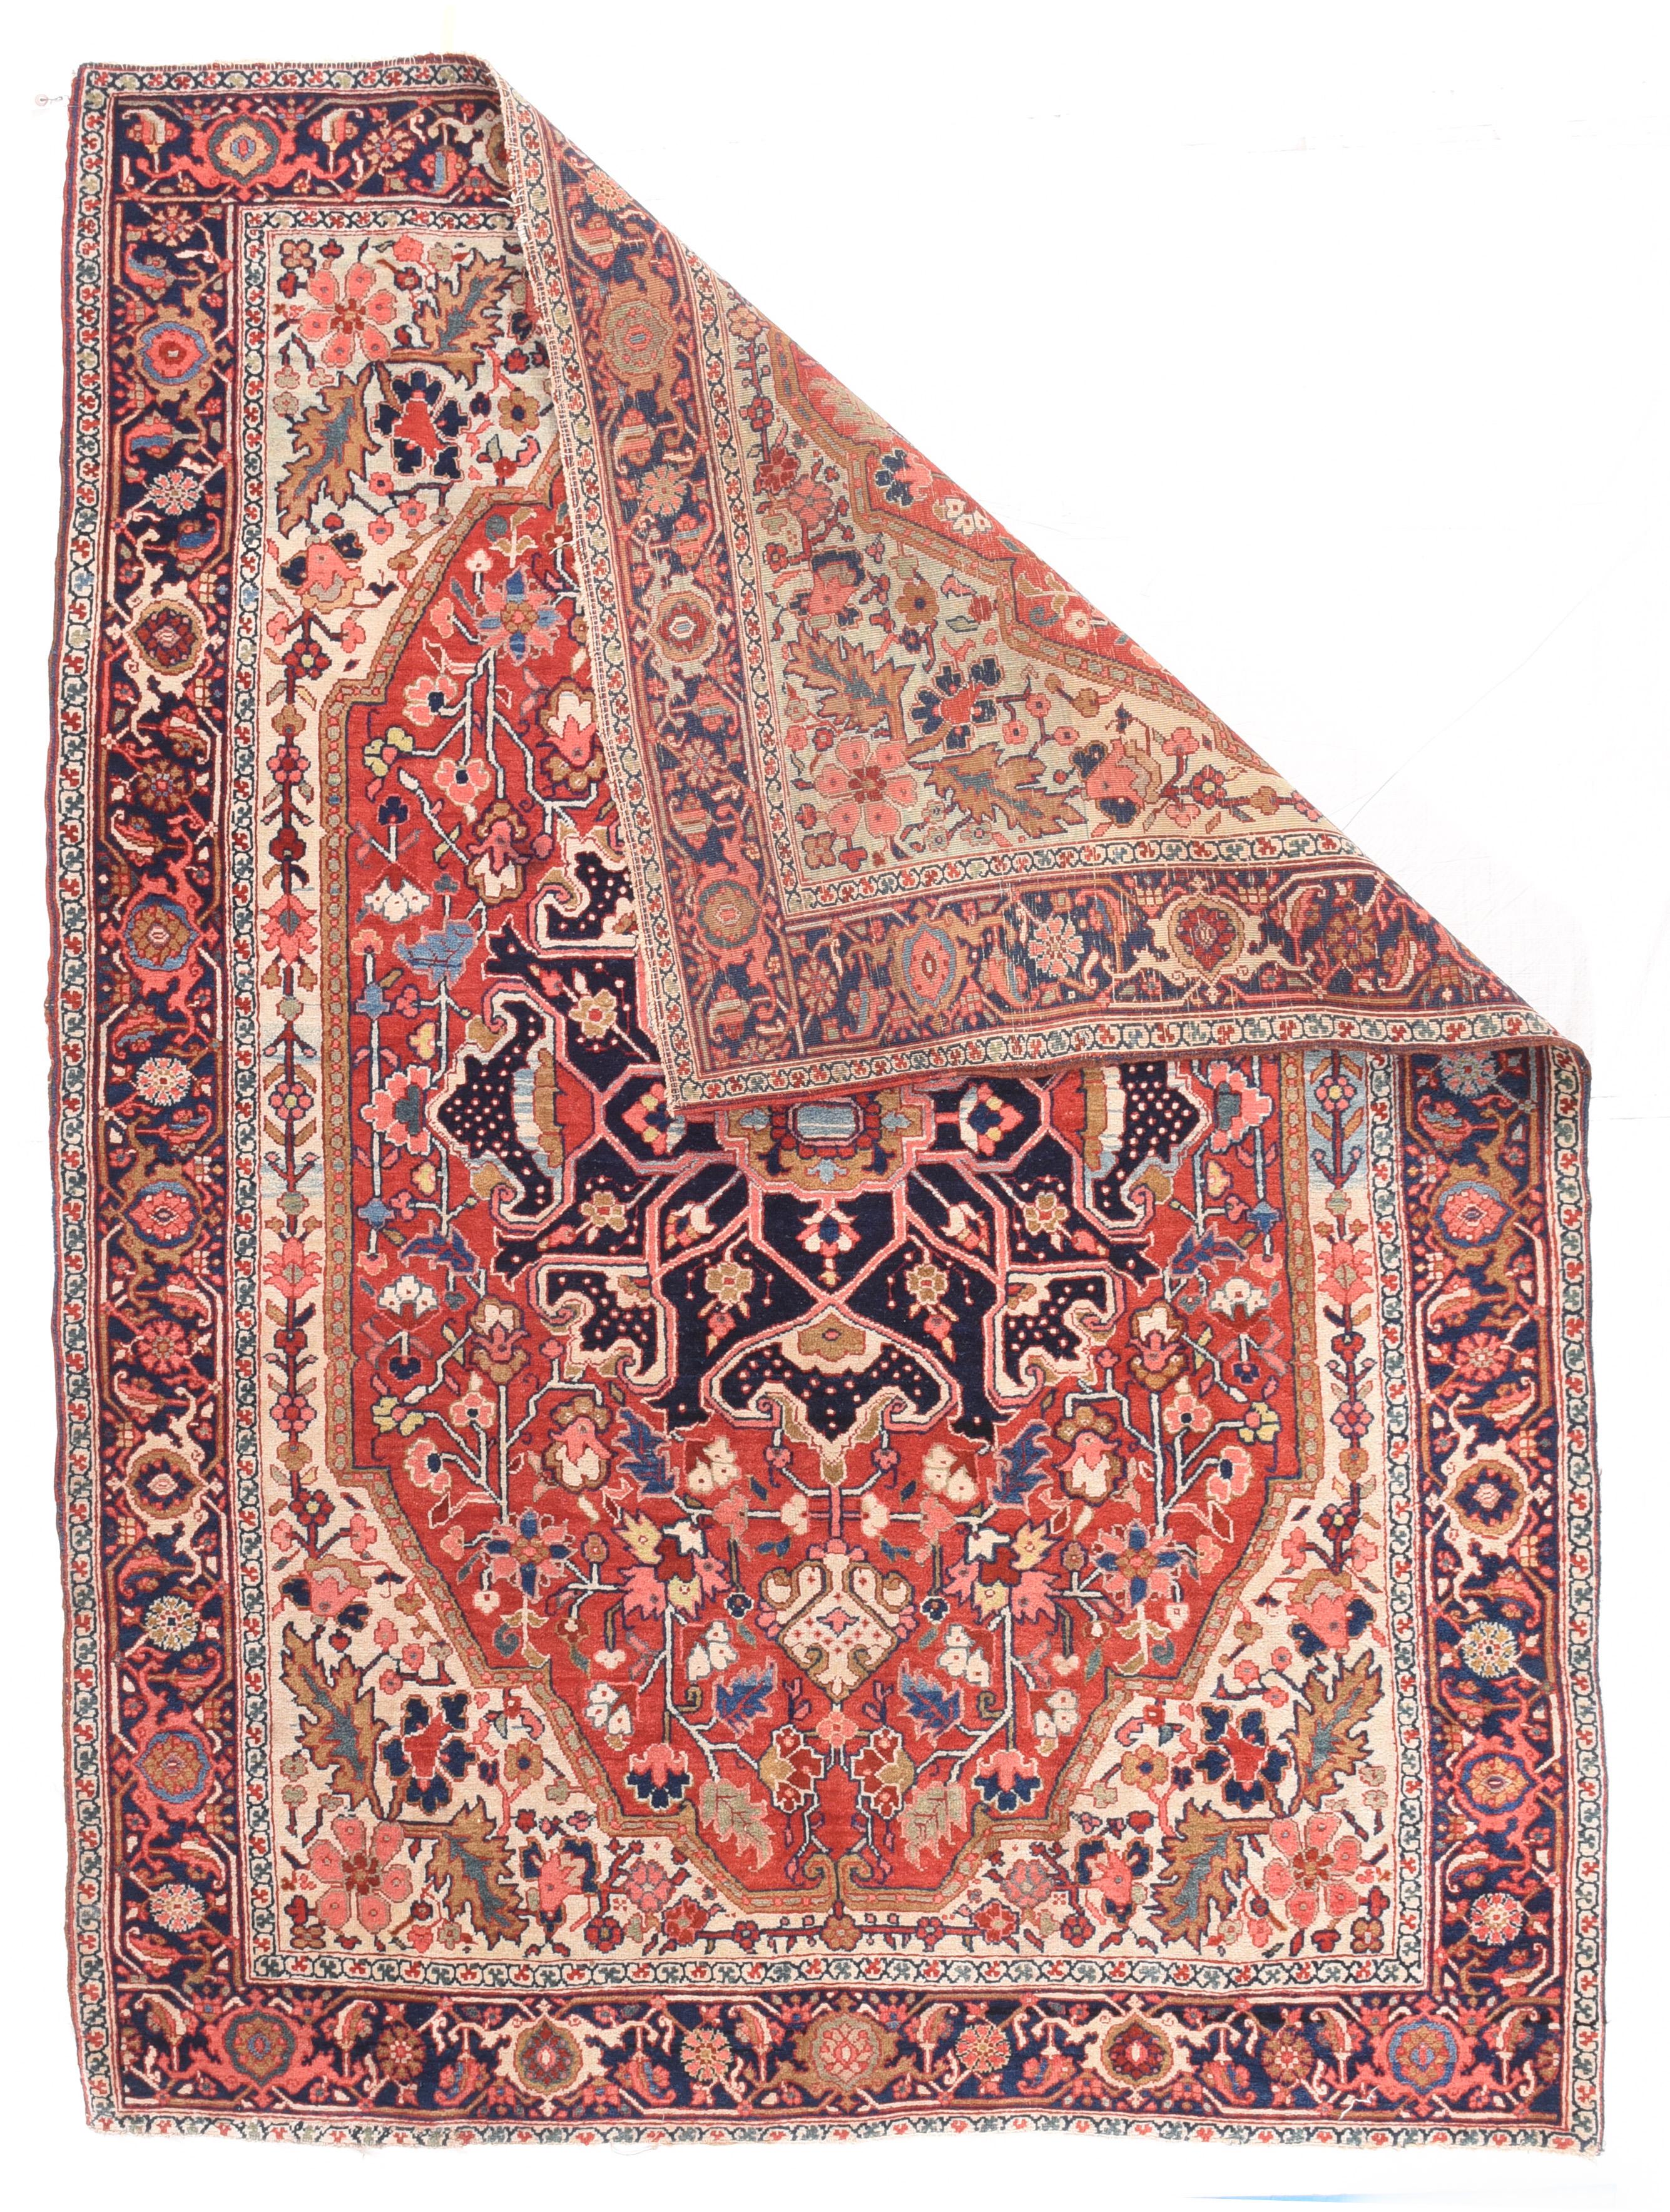 Asian Antique Persian Serapi Area Rug For Sale